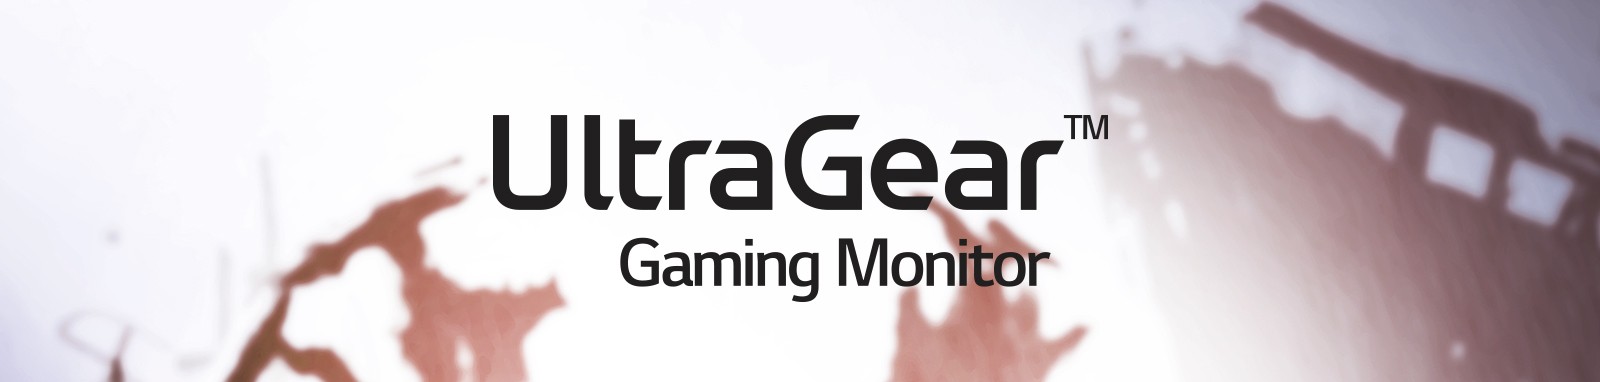 UltraGear Gaming Monitor